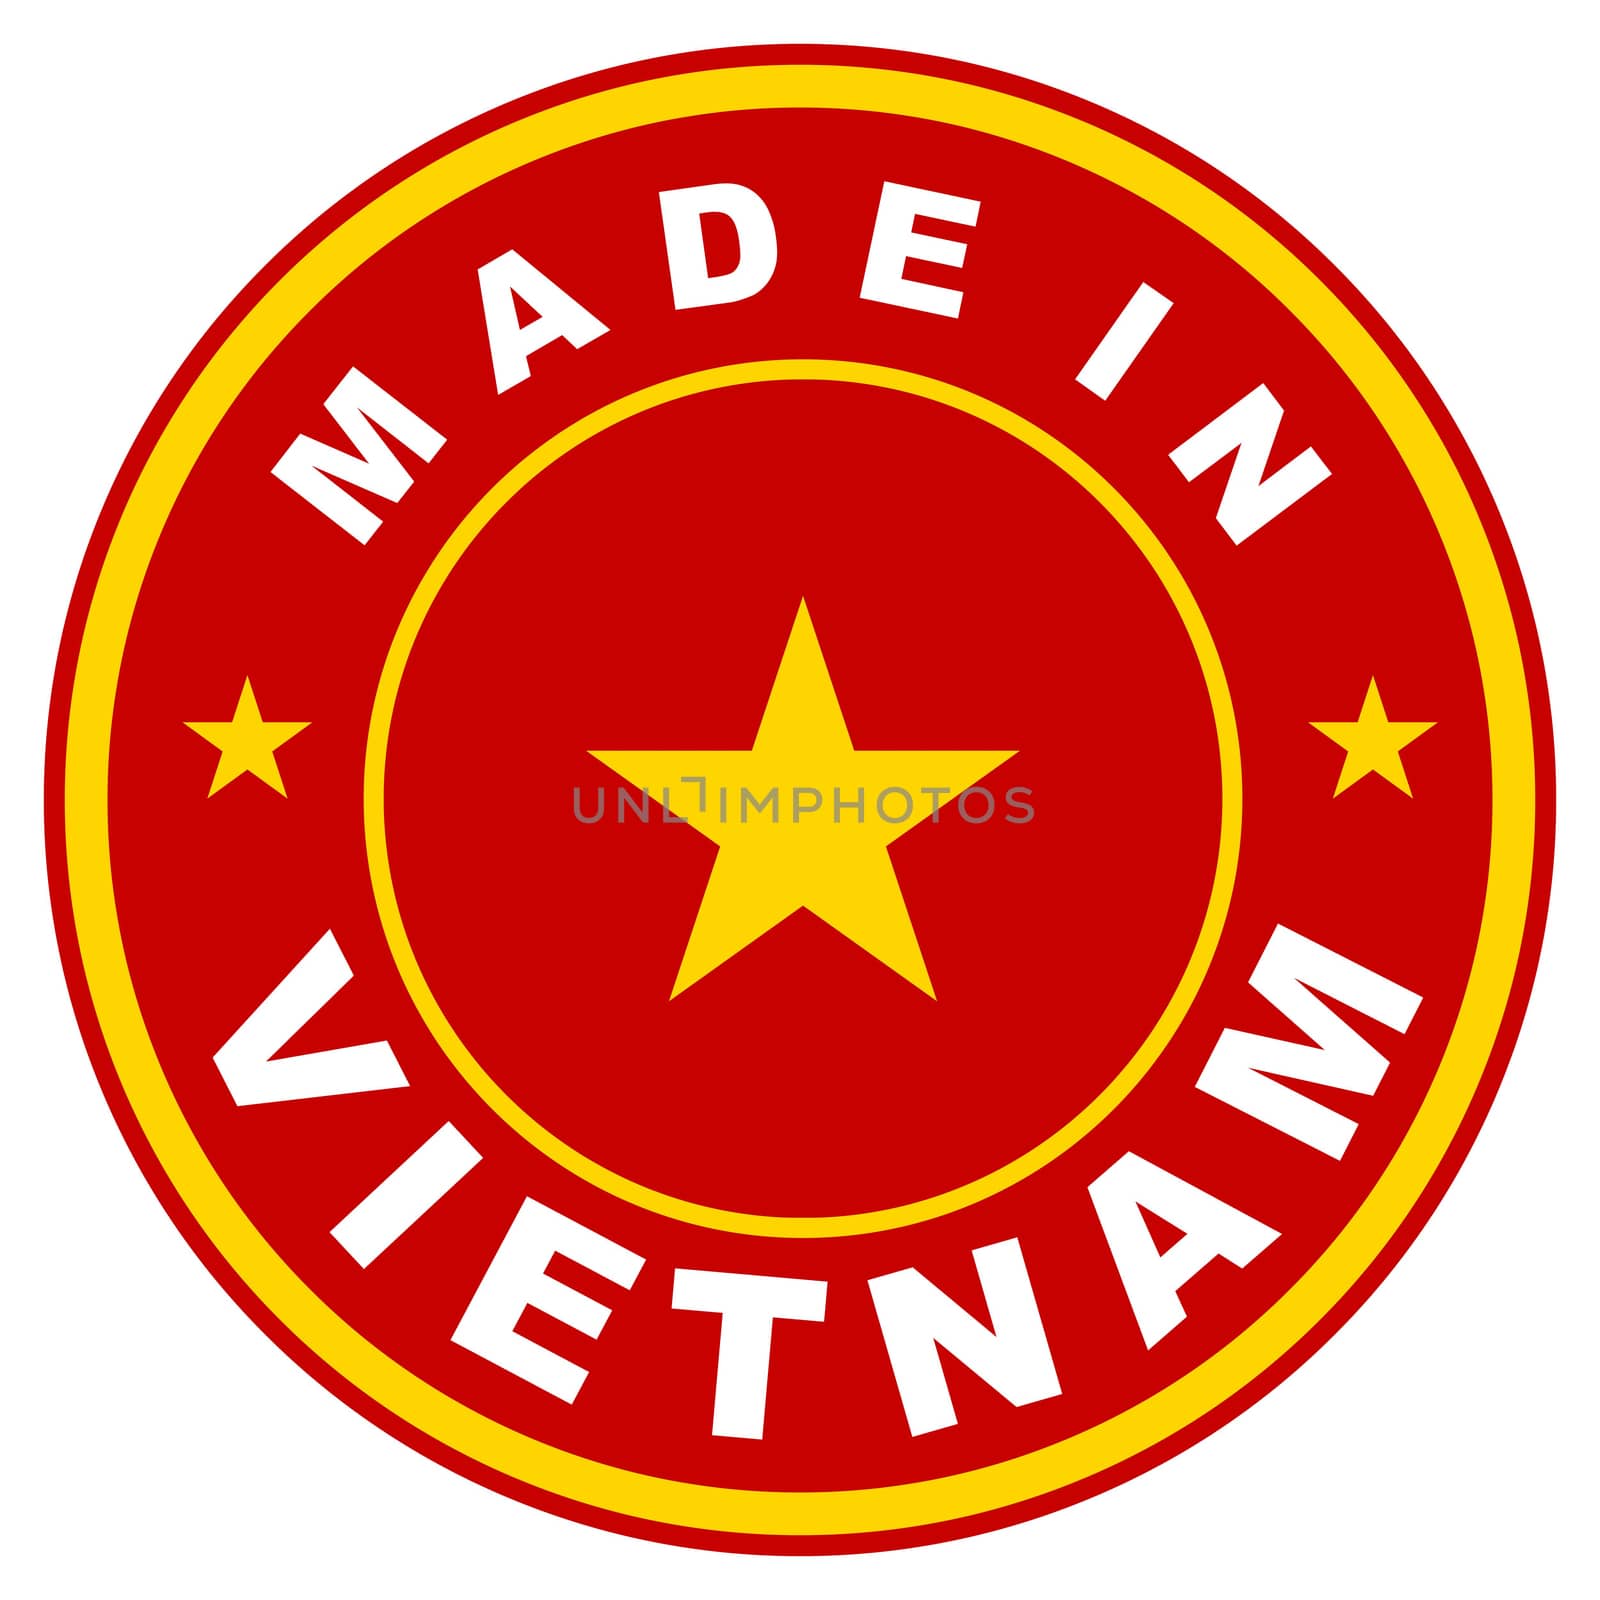 very big size made in vietnam label illustratioan